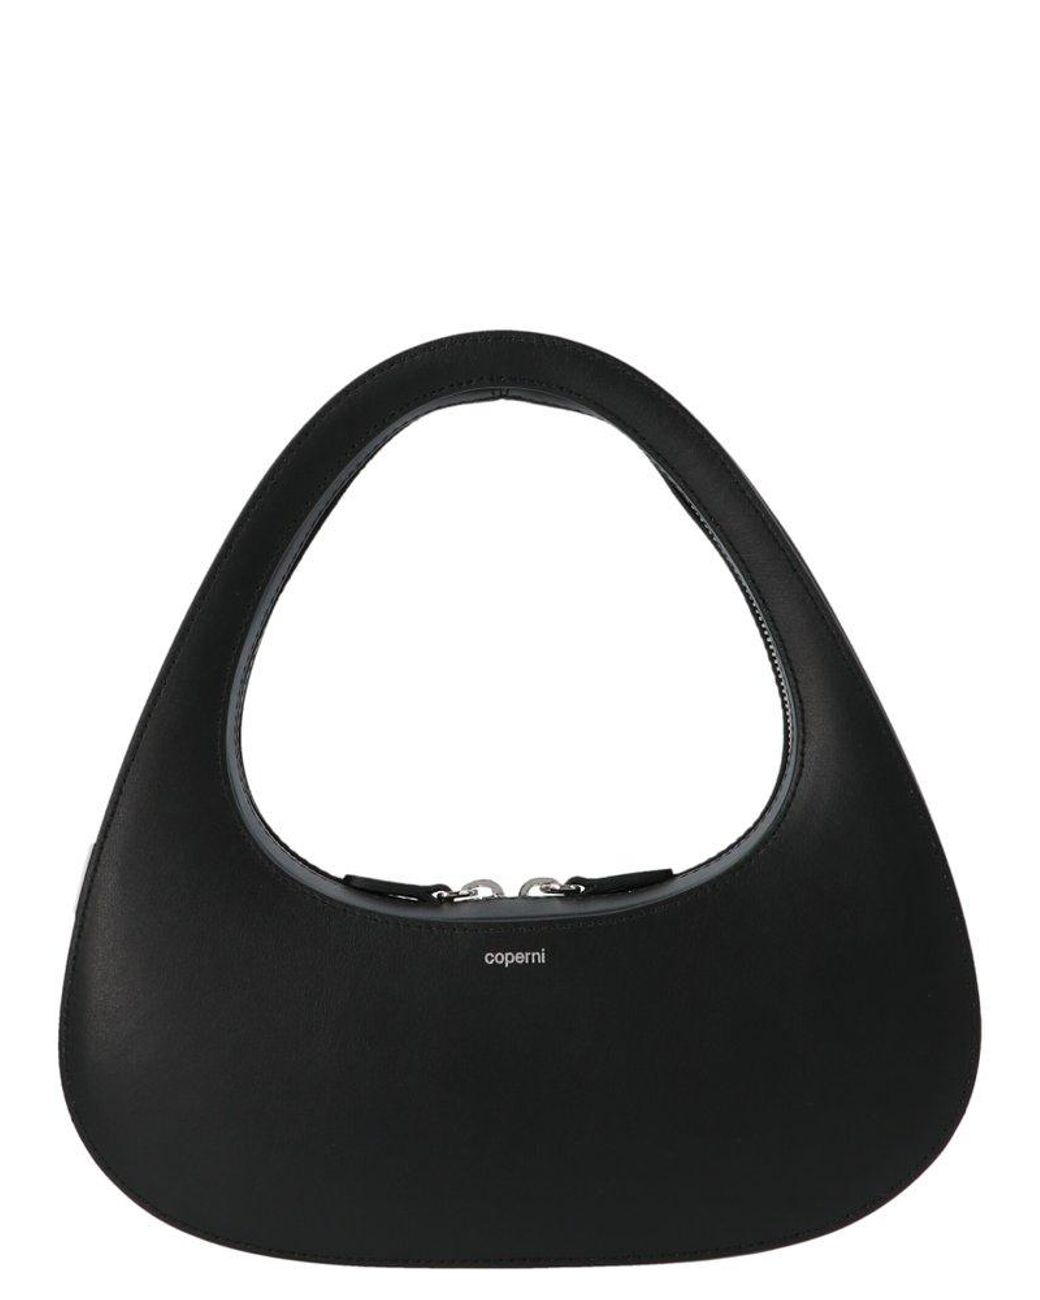 Coperni Swipe Logo Detailed Baguette Bag in Black | Lyst